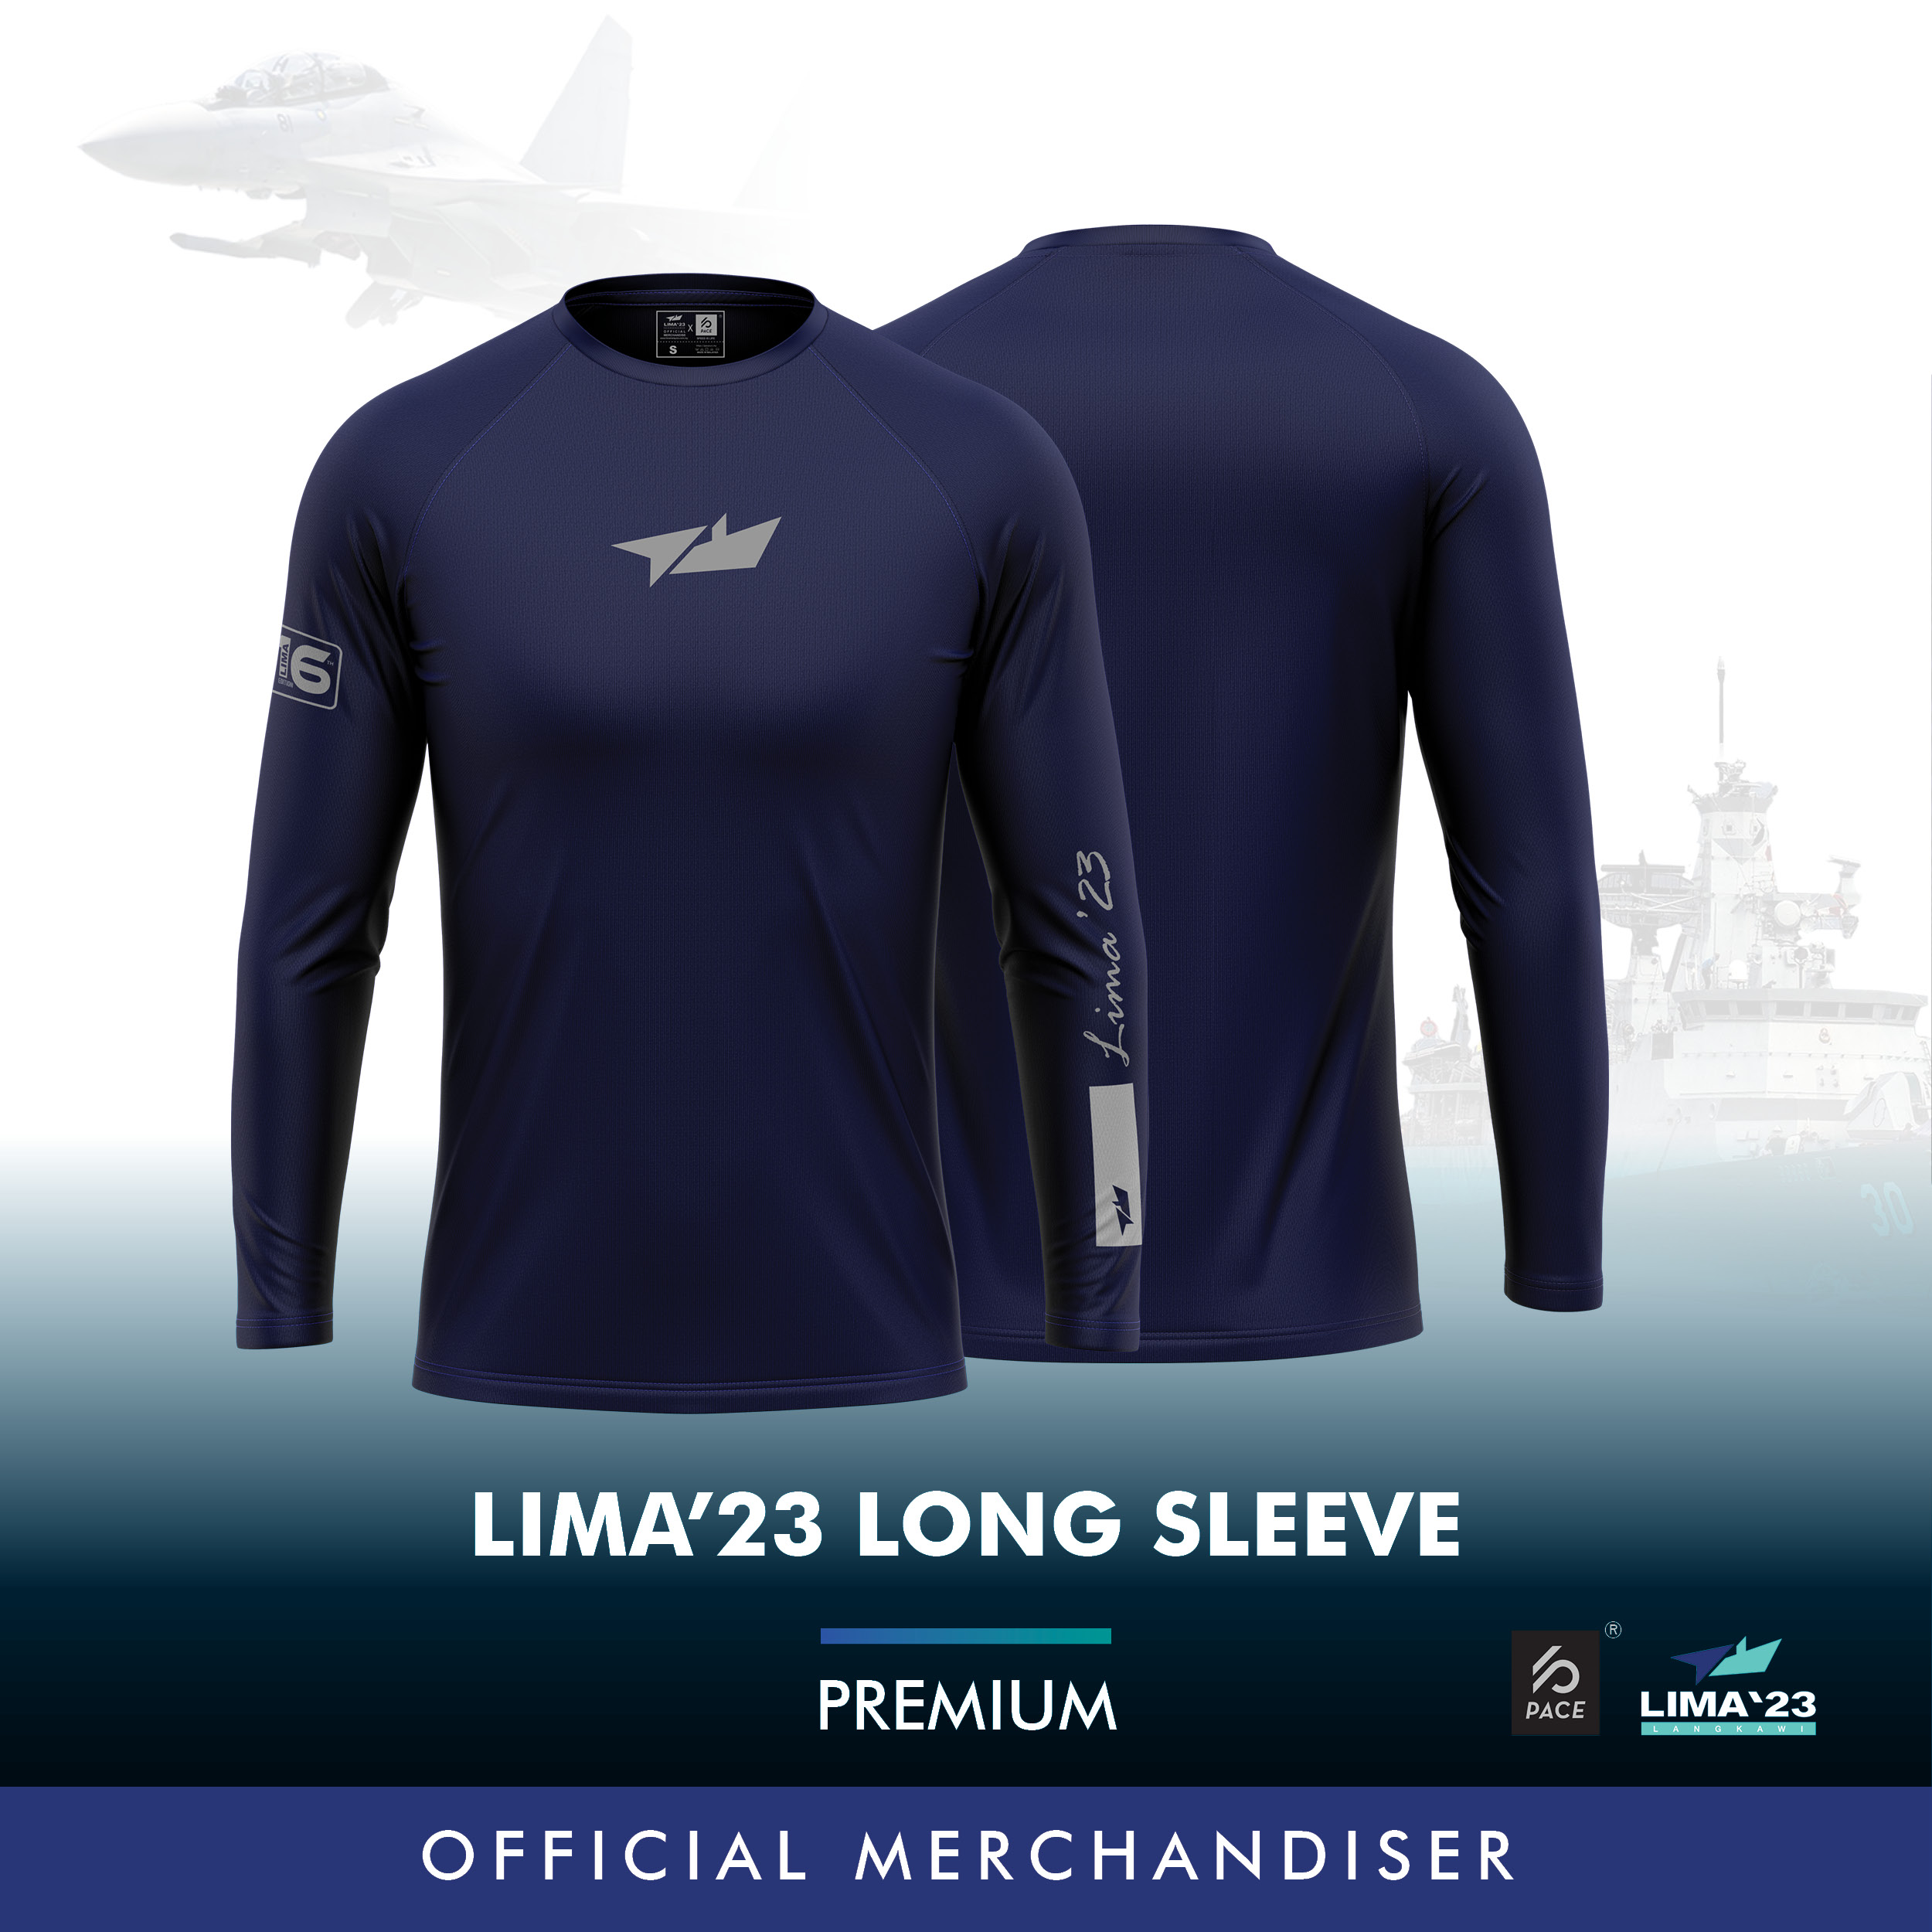 LIMA'23 Premium Long Sleeve 